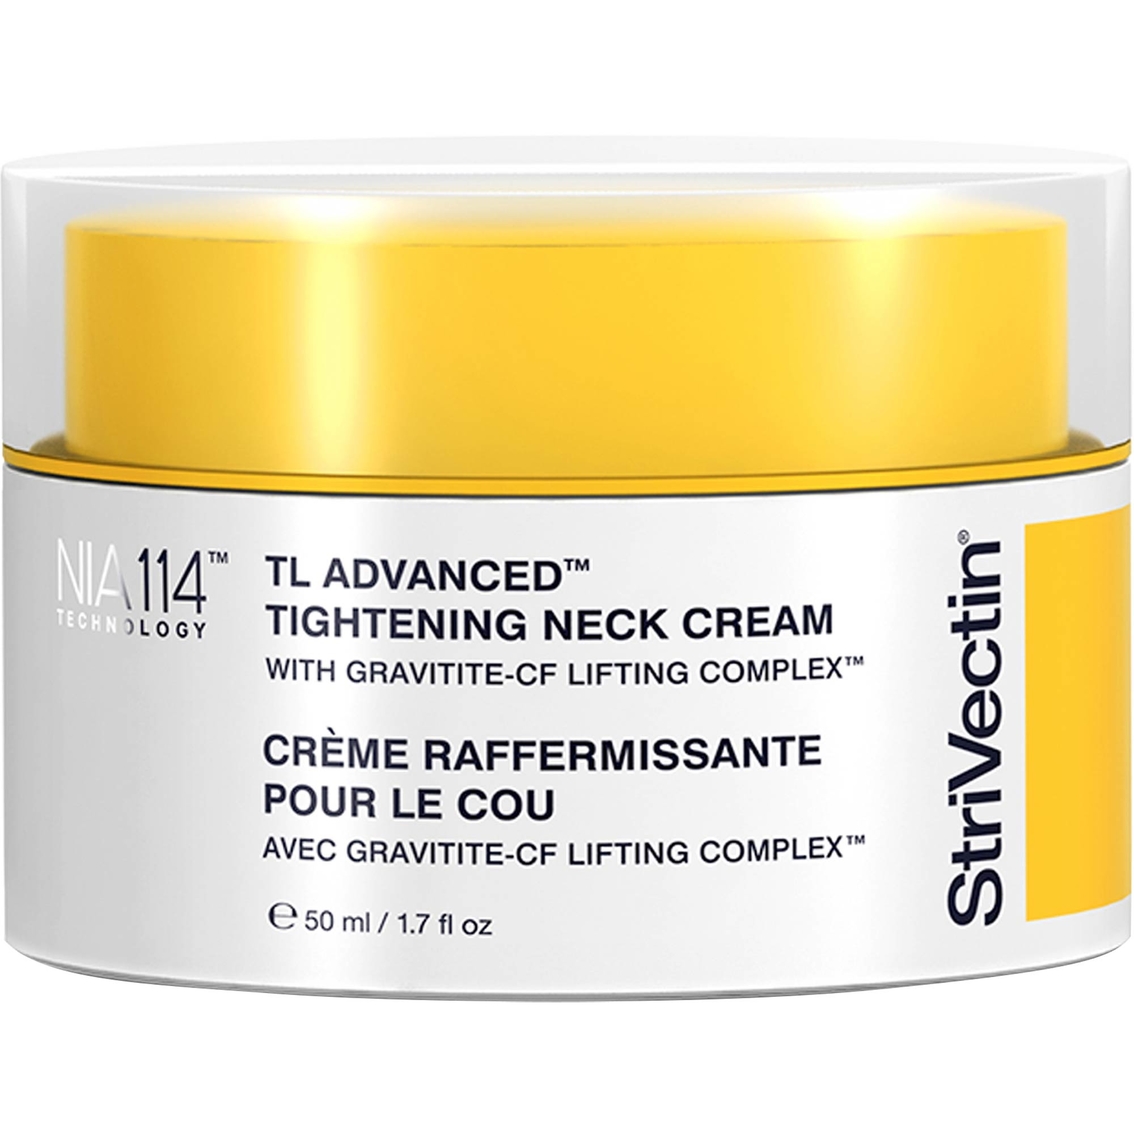 Strivectin Tl Advanced Light Tightening Neck Cream Anti Aging | Free ...